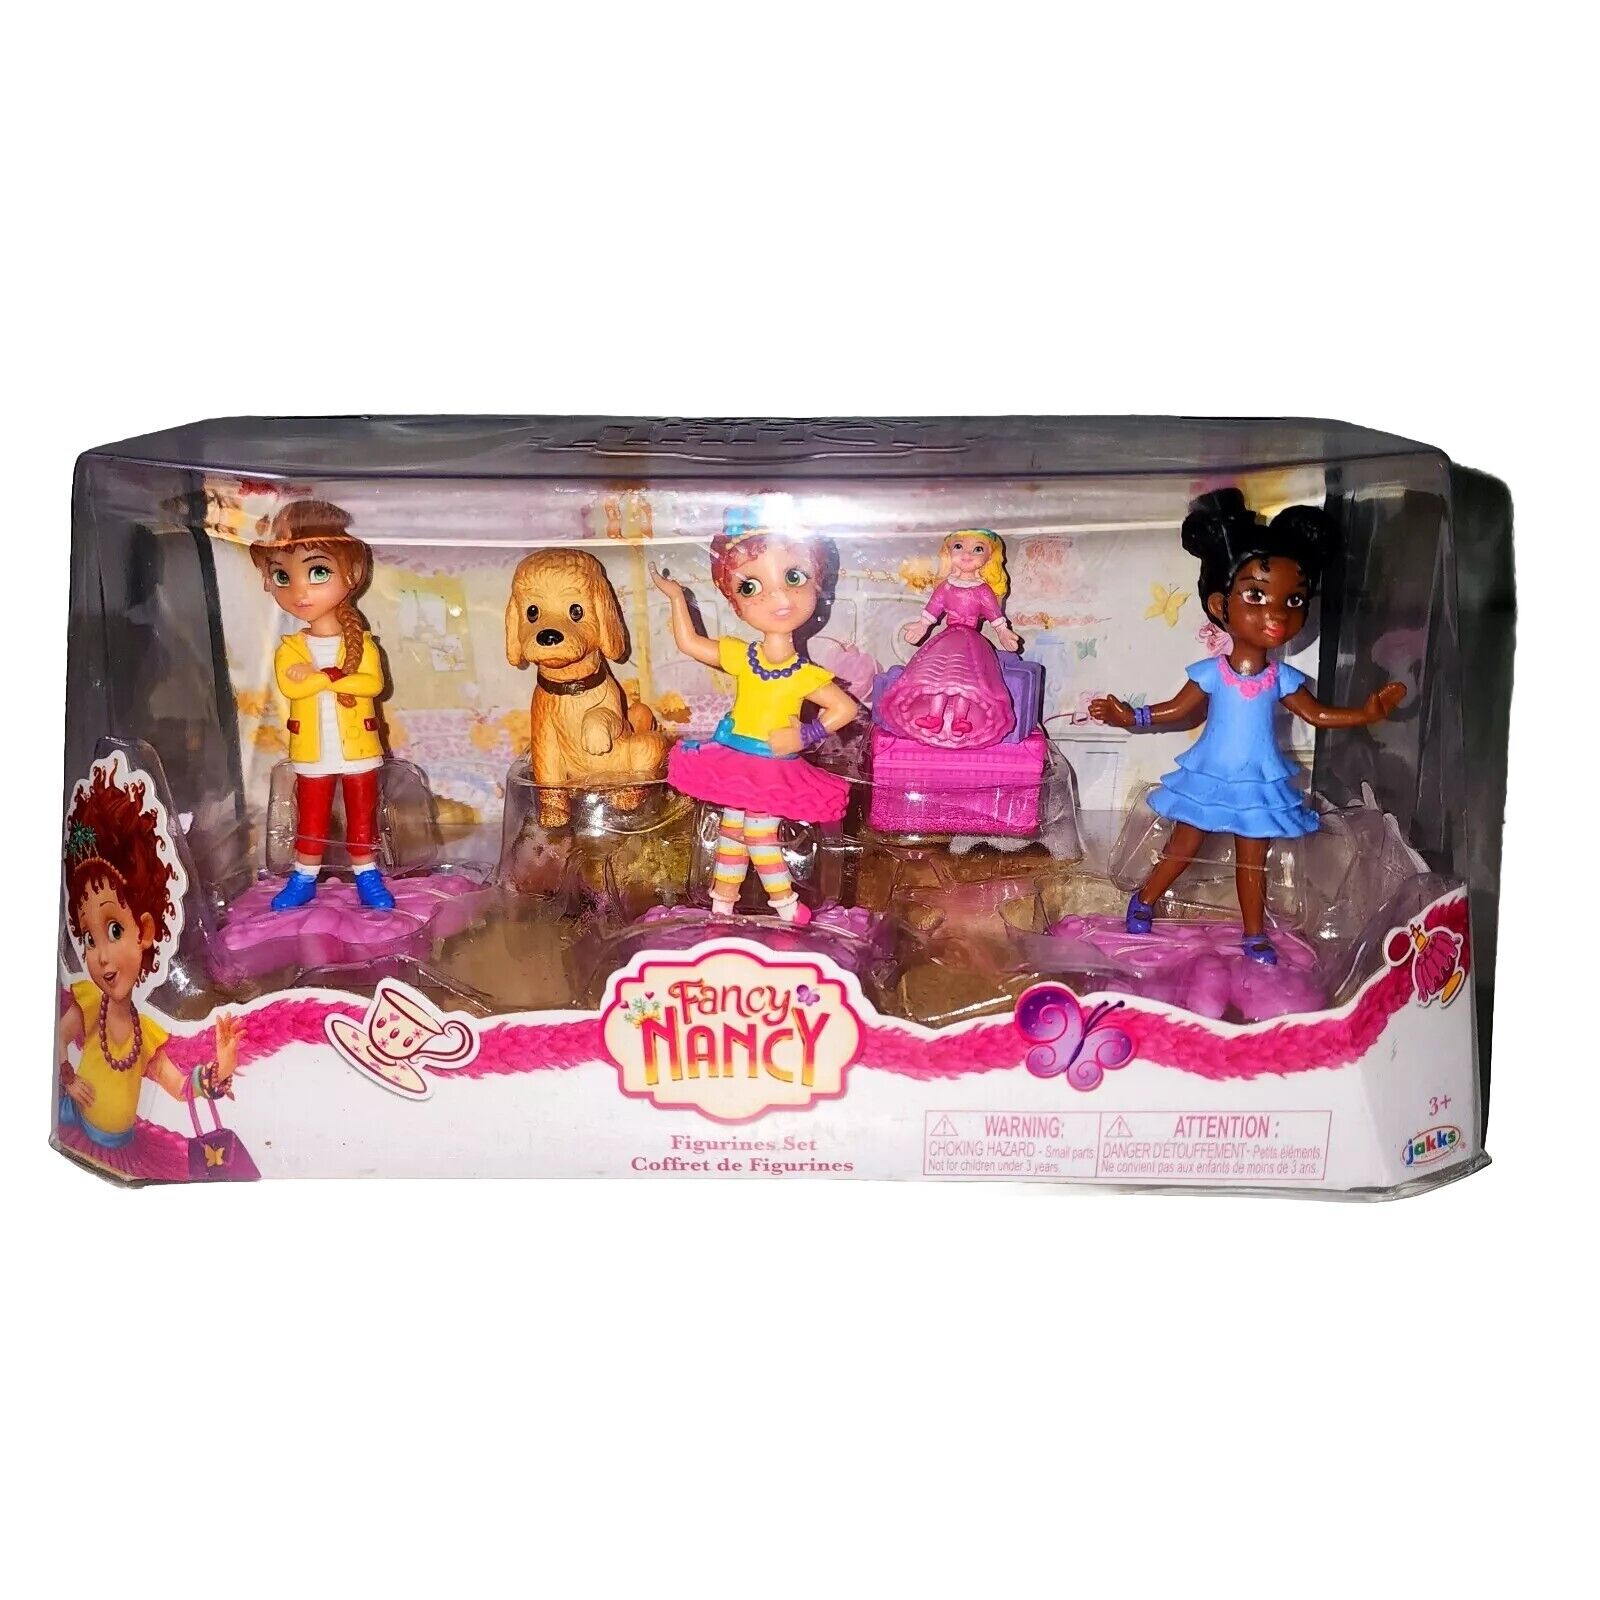 Disney Junior Fancy Nancy 5 Piece Collectible Action Figurines Set Girls Toys